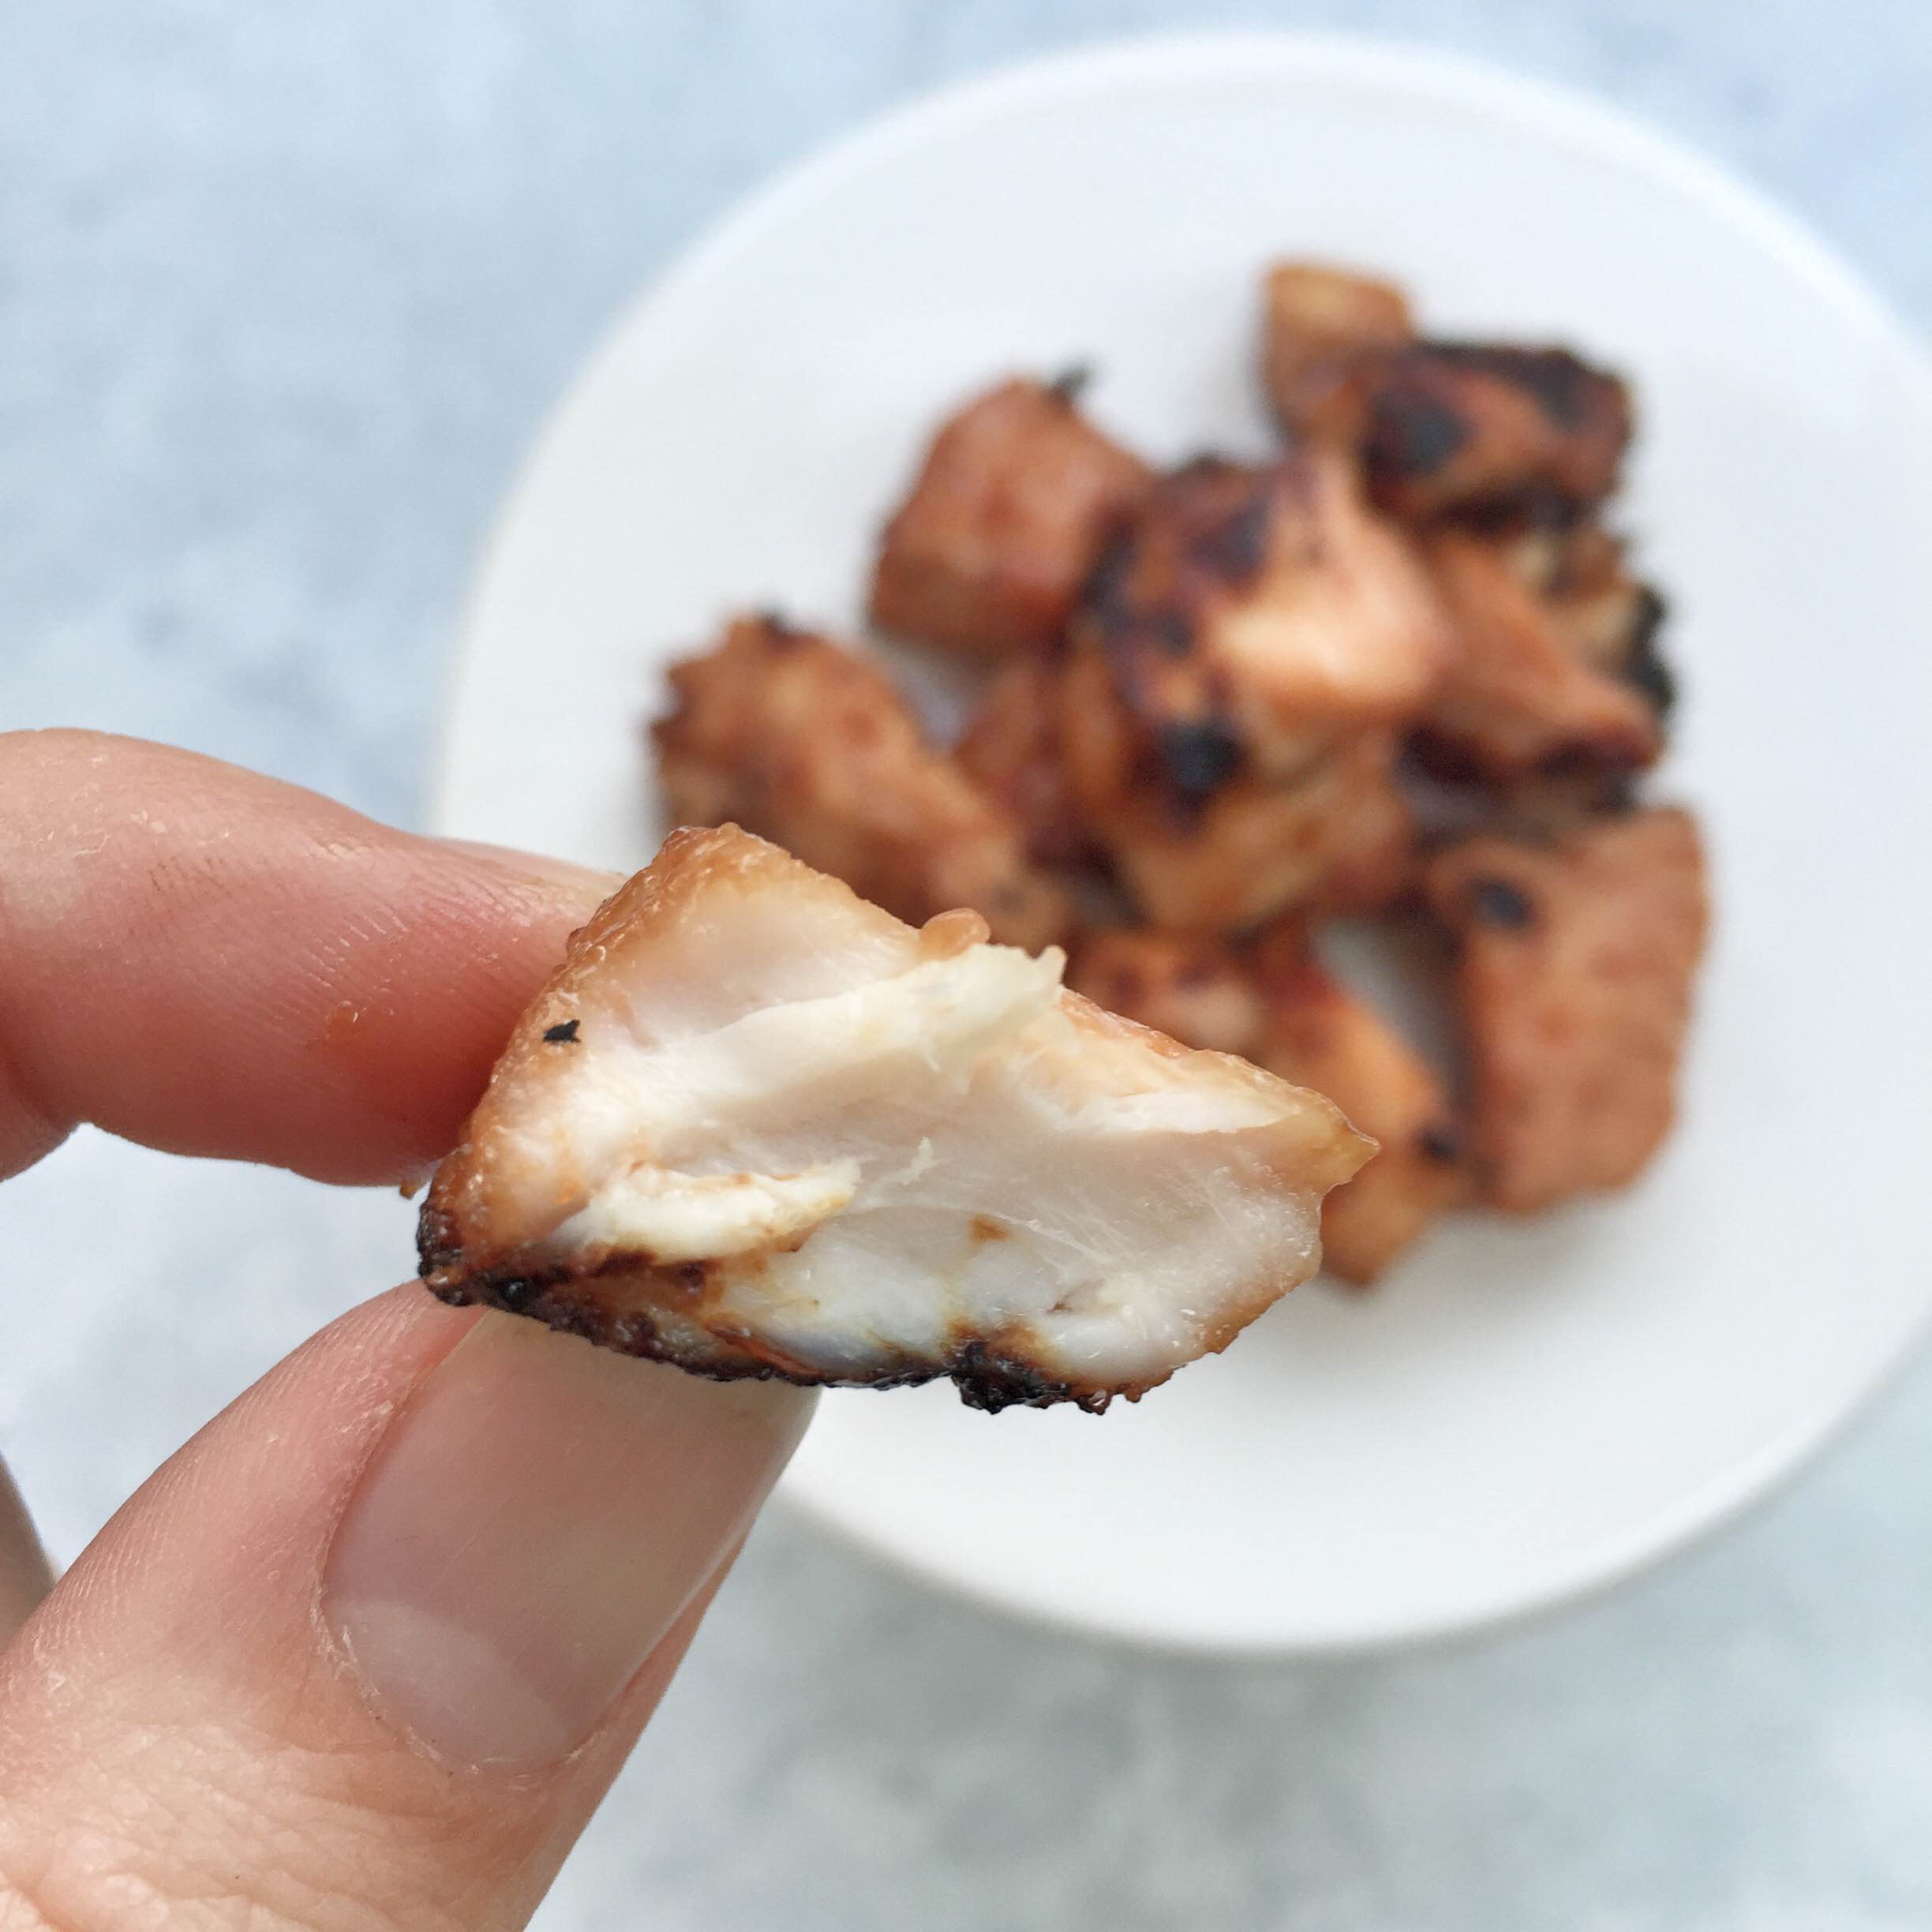 Honey garlic turkey tips | Summer grilling tips | Marinated turkey on the grill recipes! GinaKirk.com @ginaekirk